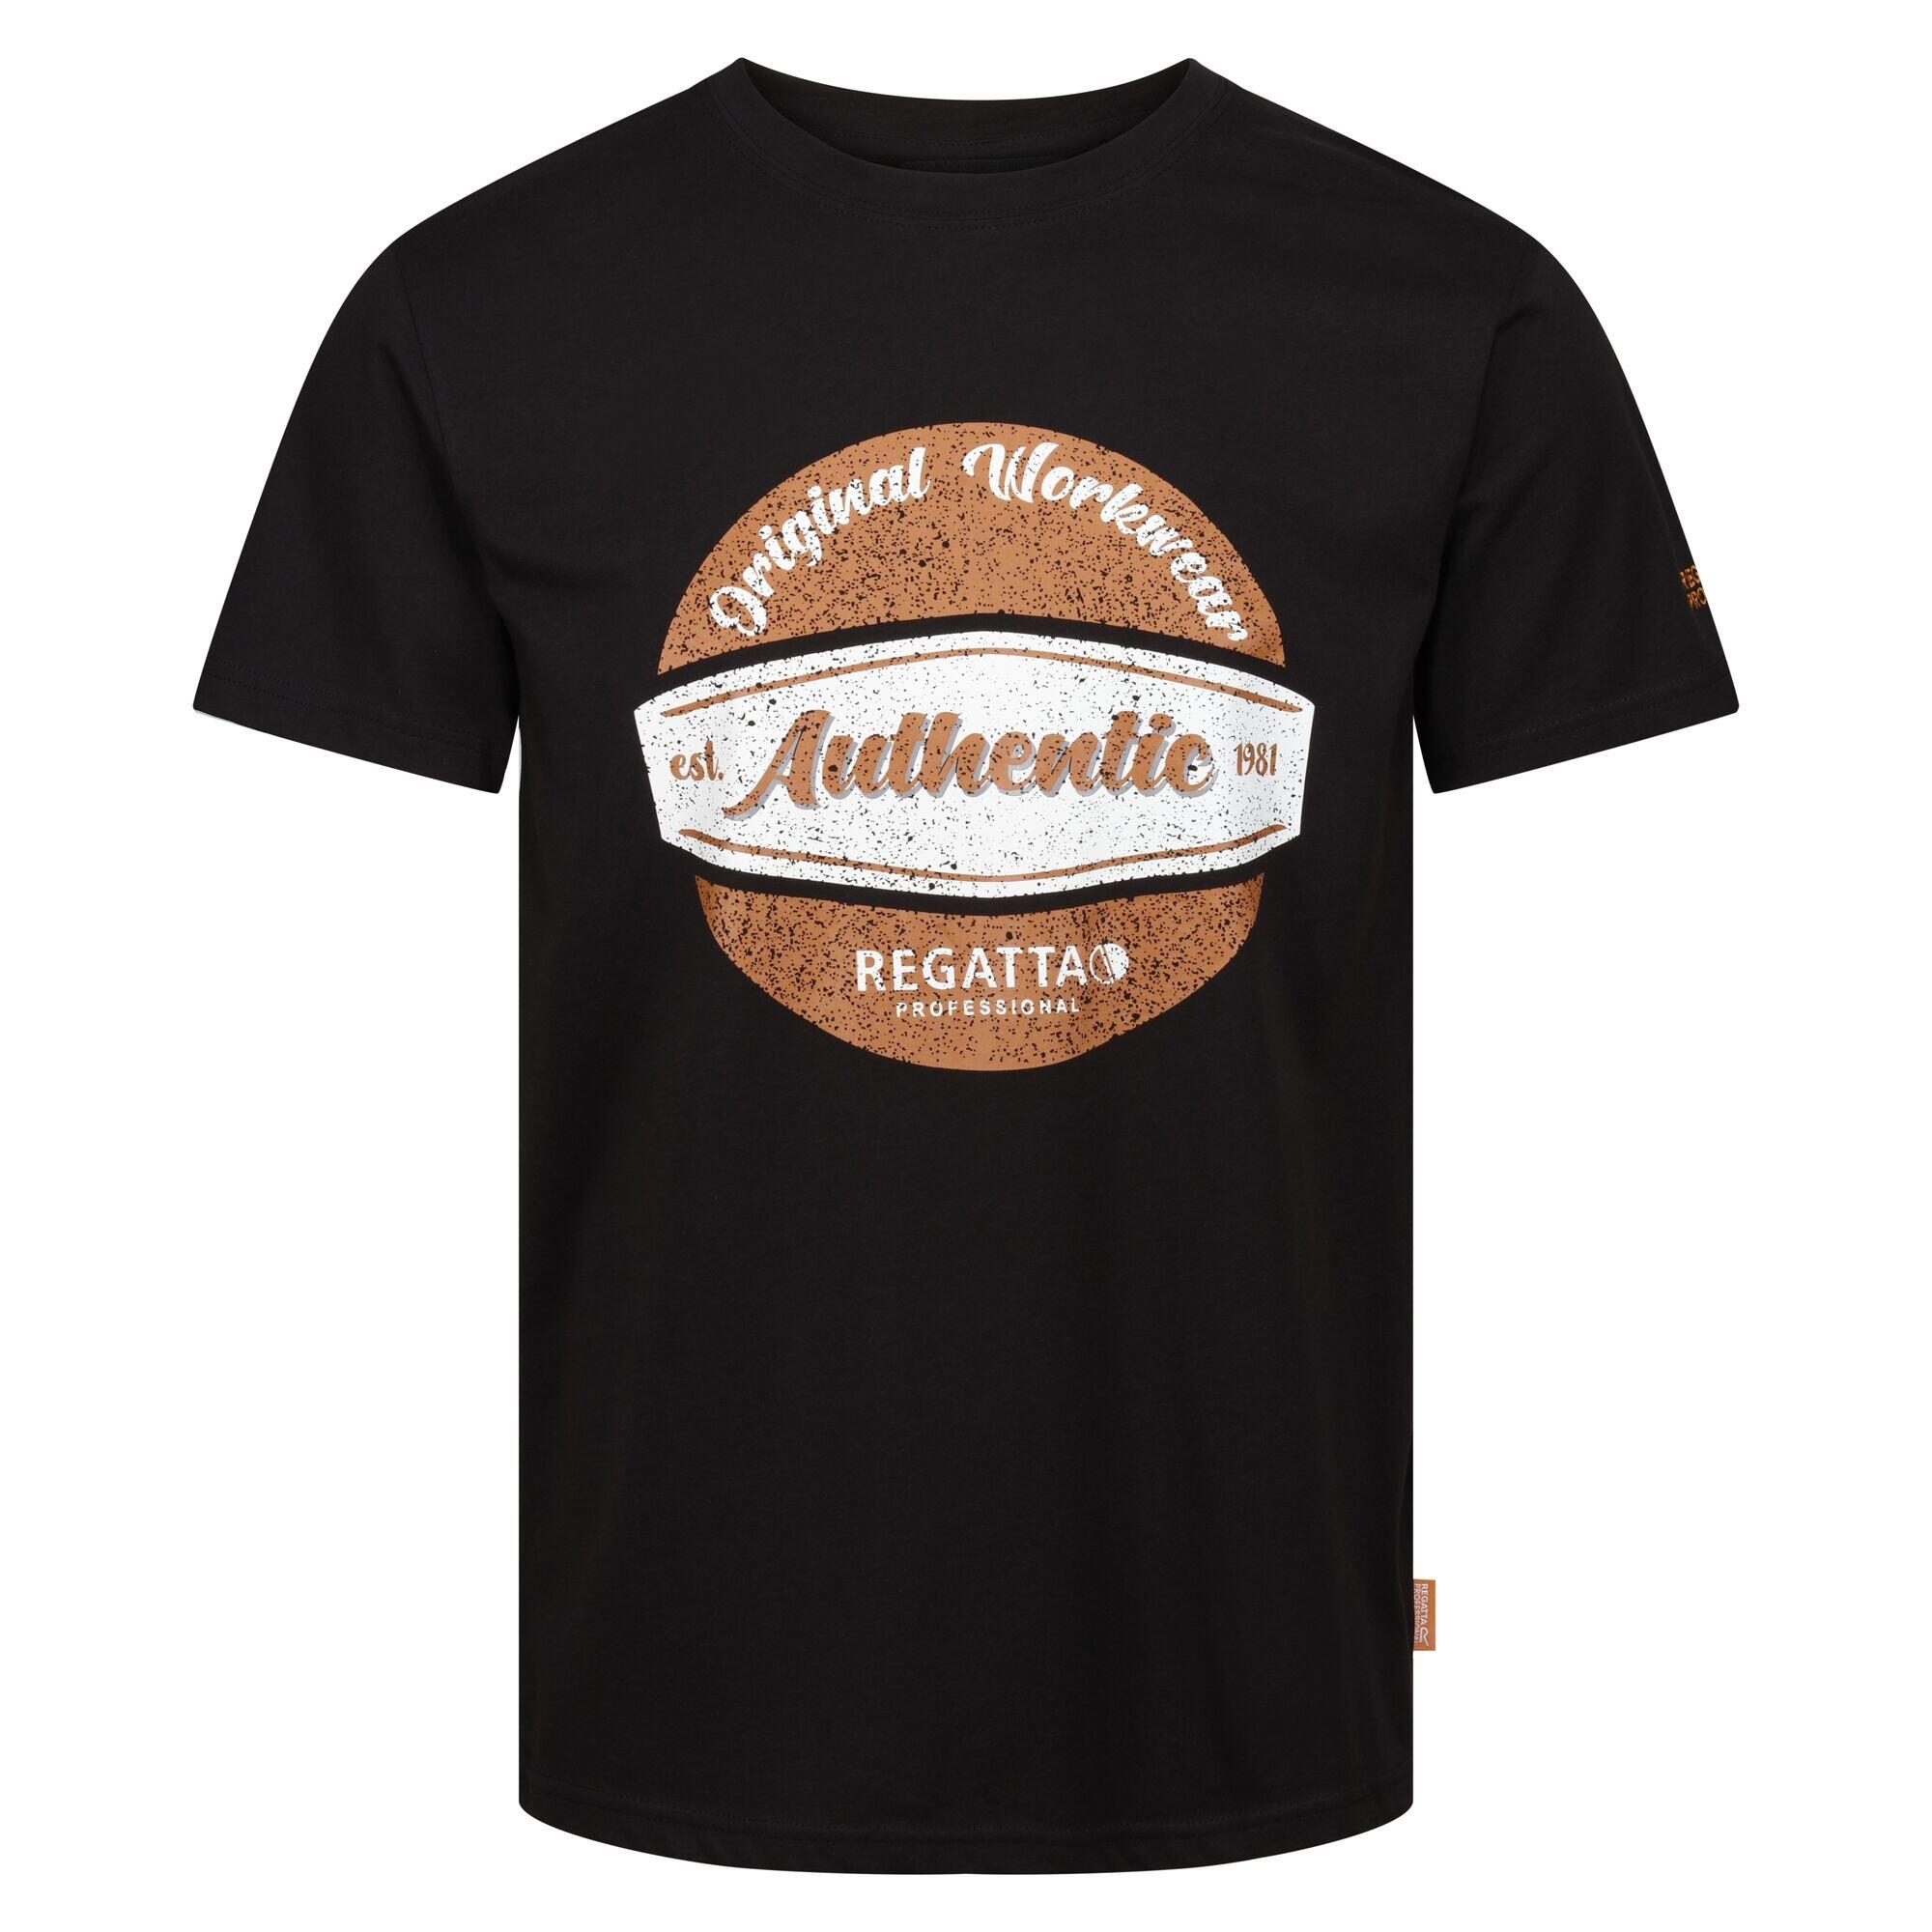 REGATTA Mens Original Workwear Cotton TShirt (Black)